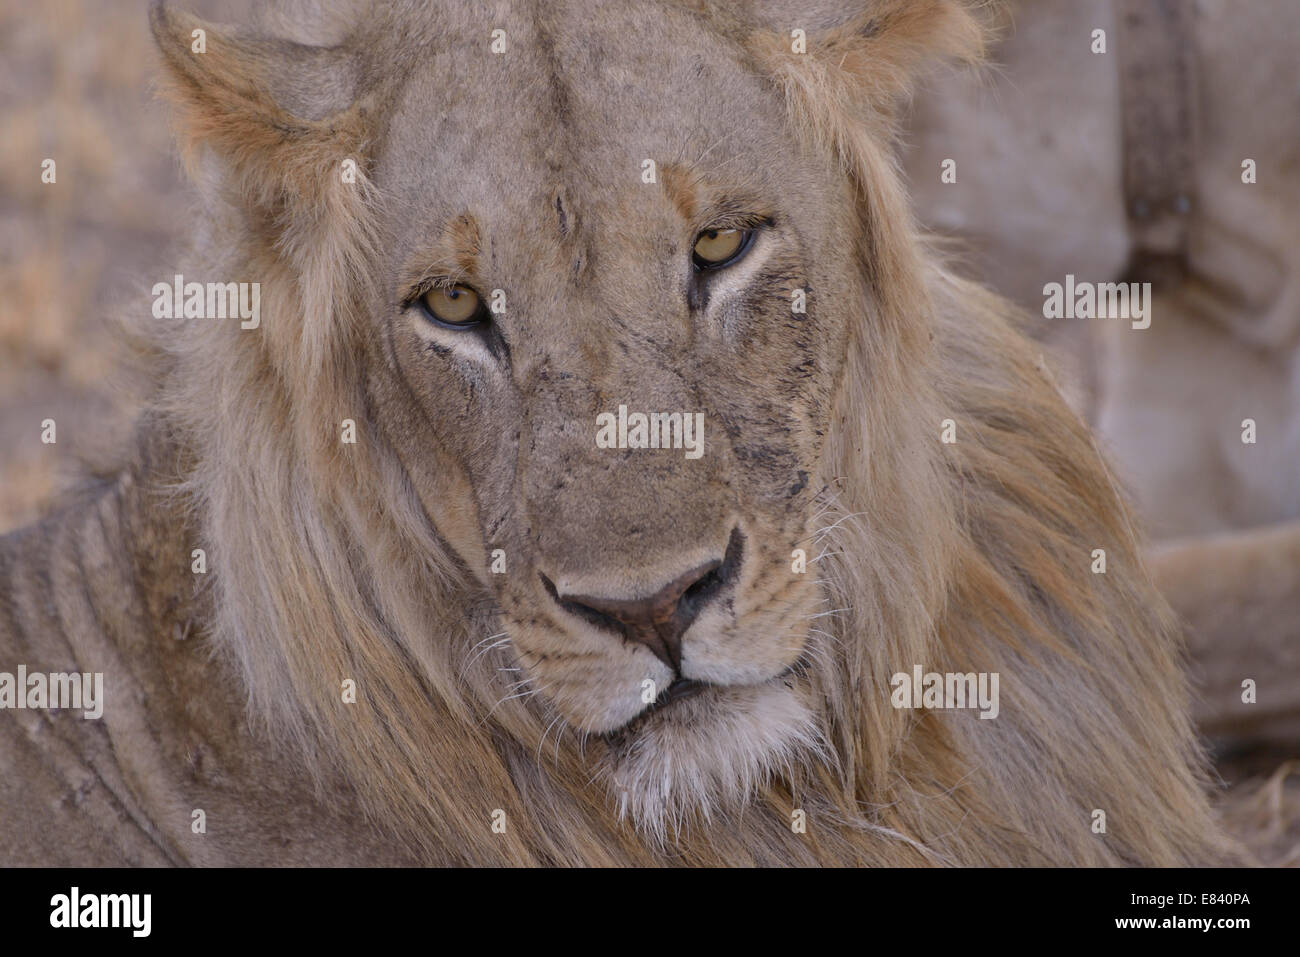 Maned lion (Panthera leo), old animal, portrait, Nsefu sector, South Luangwa National Park, Zambia Stock Photo